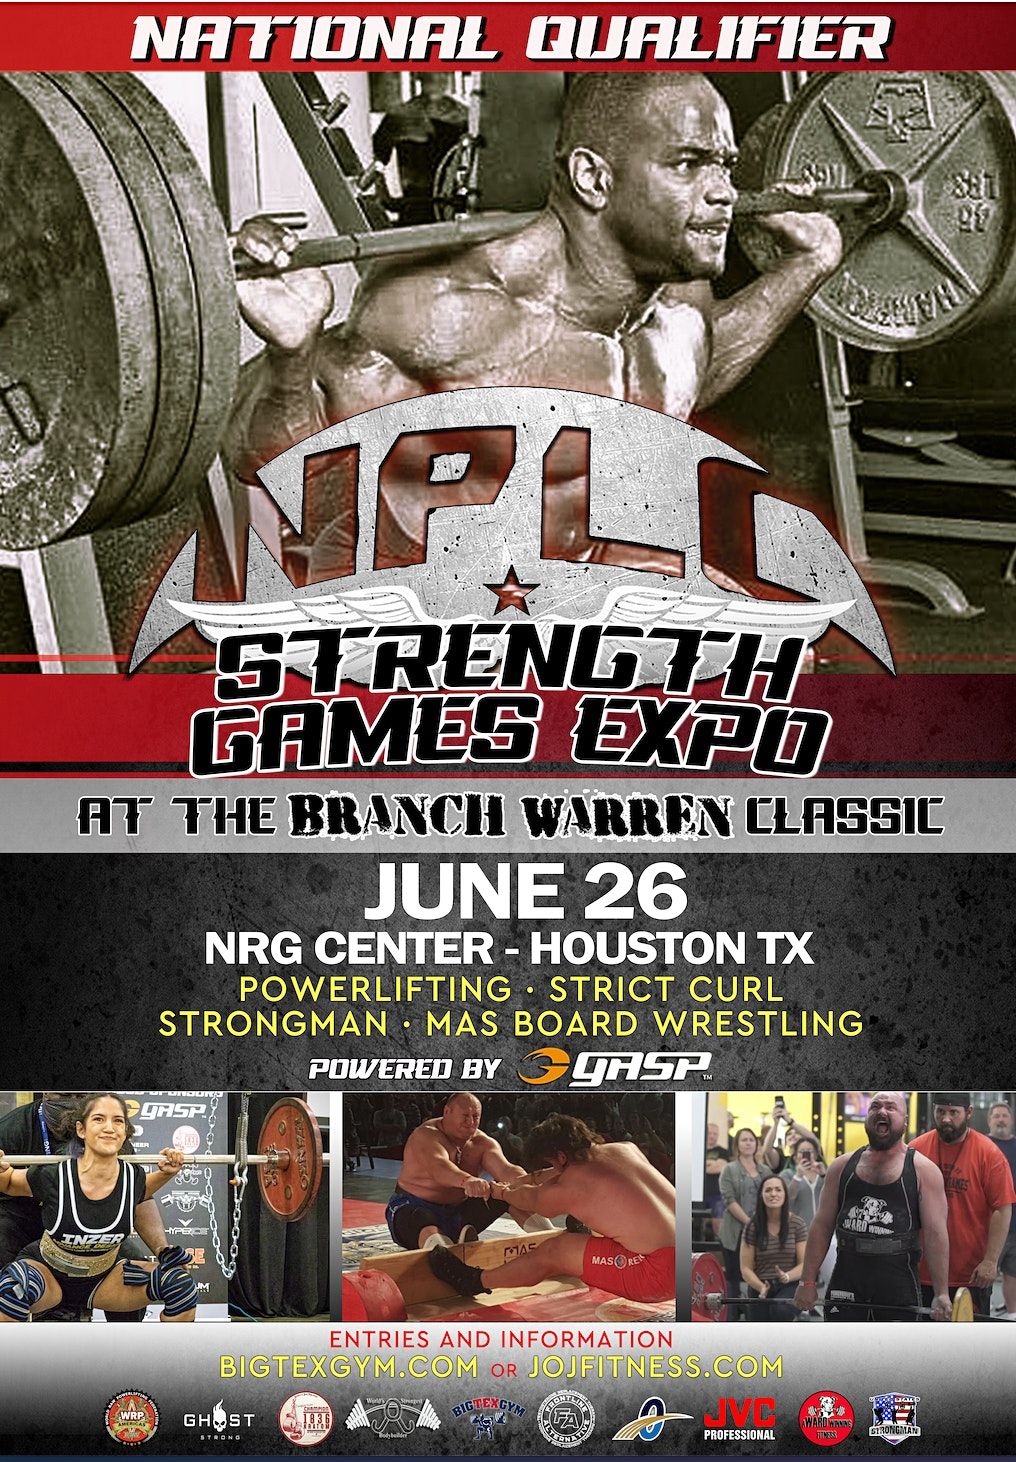 WRPF Presents: Strength Games Expo Powerlifting @ Branch Warren Classic